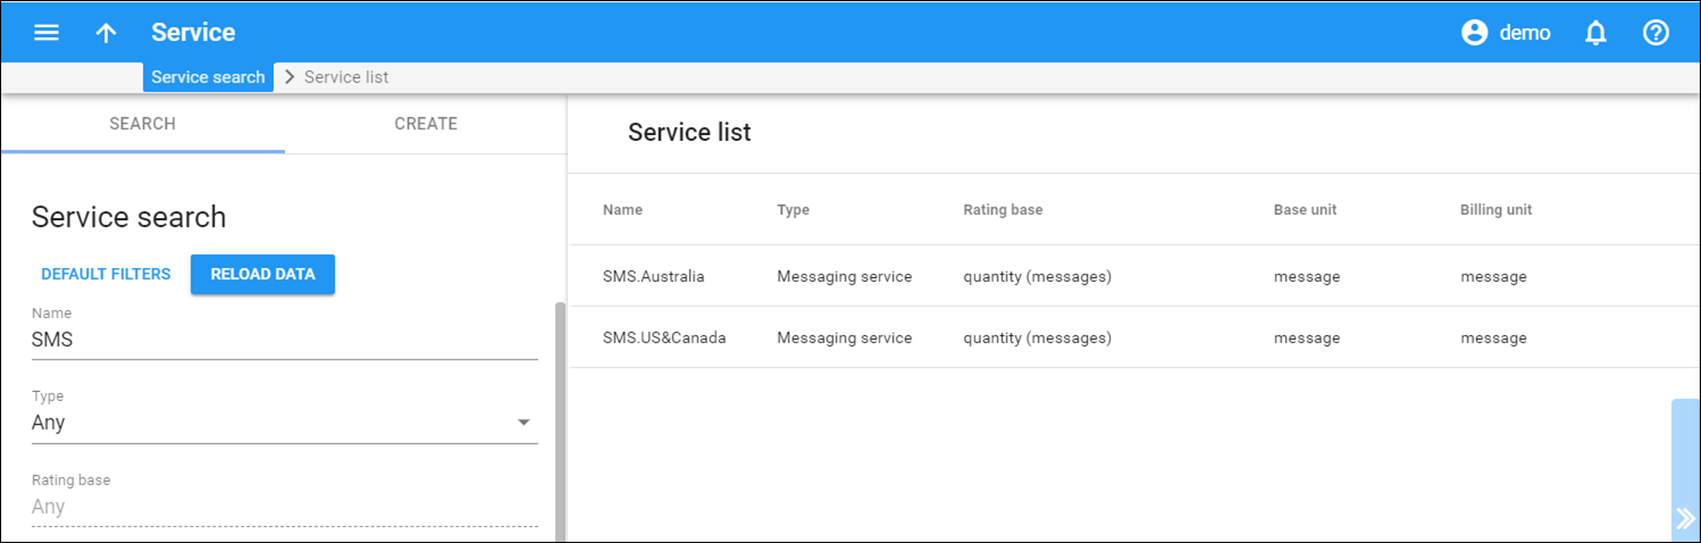 SMS service list